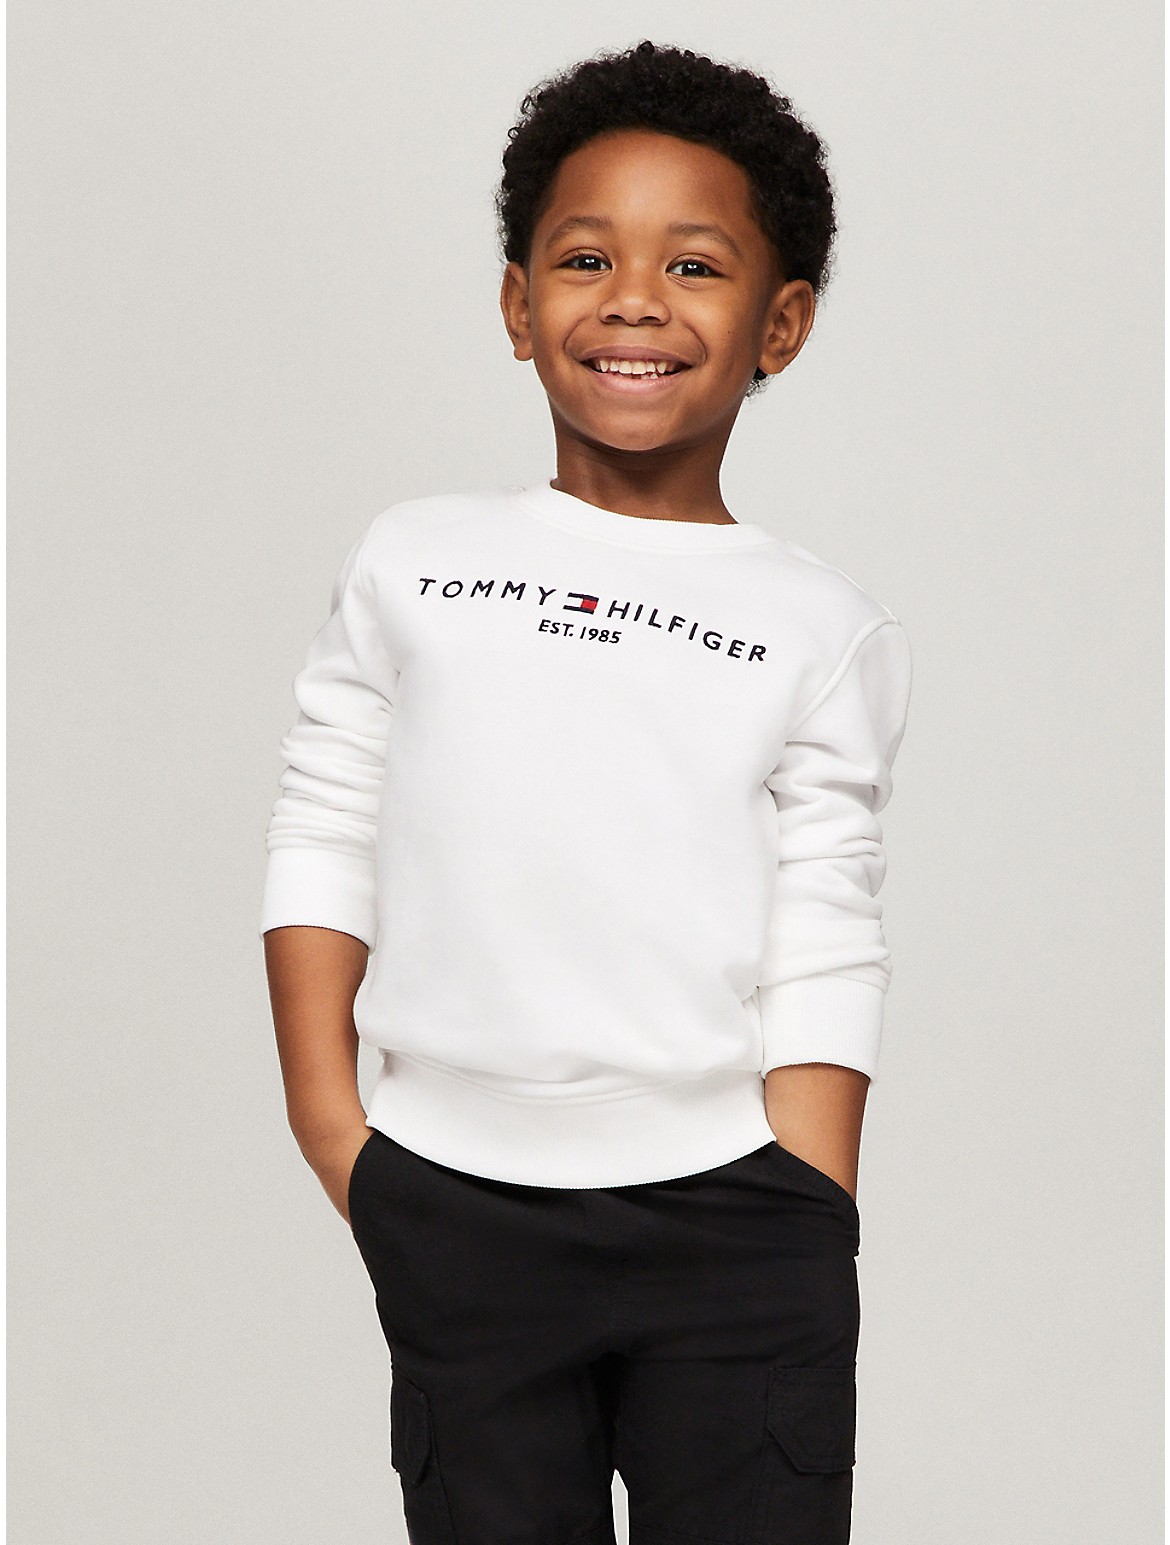 Tommy Hilfiger Boys' Kids' Tommy Logo Sweatshirt - White - S